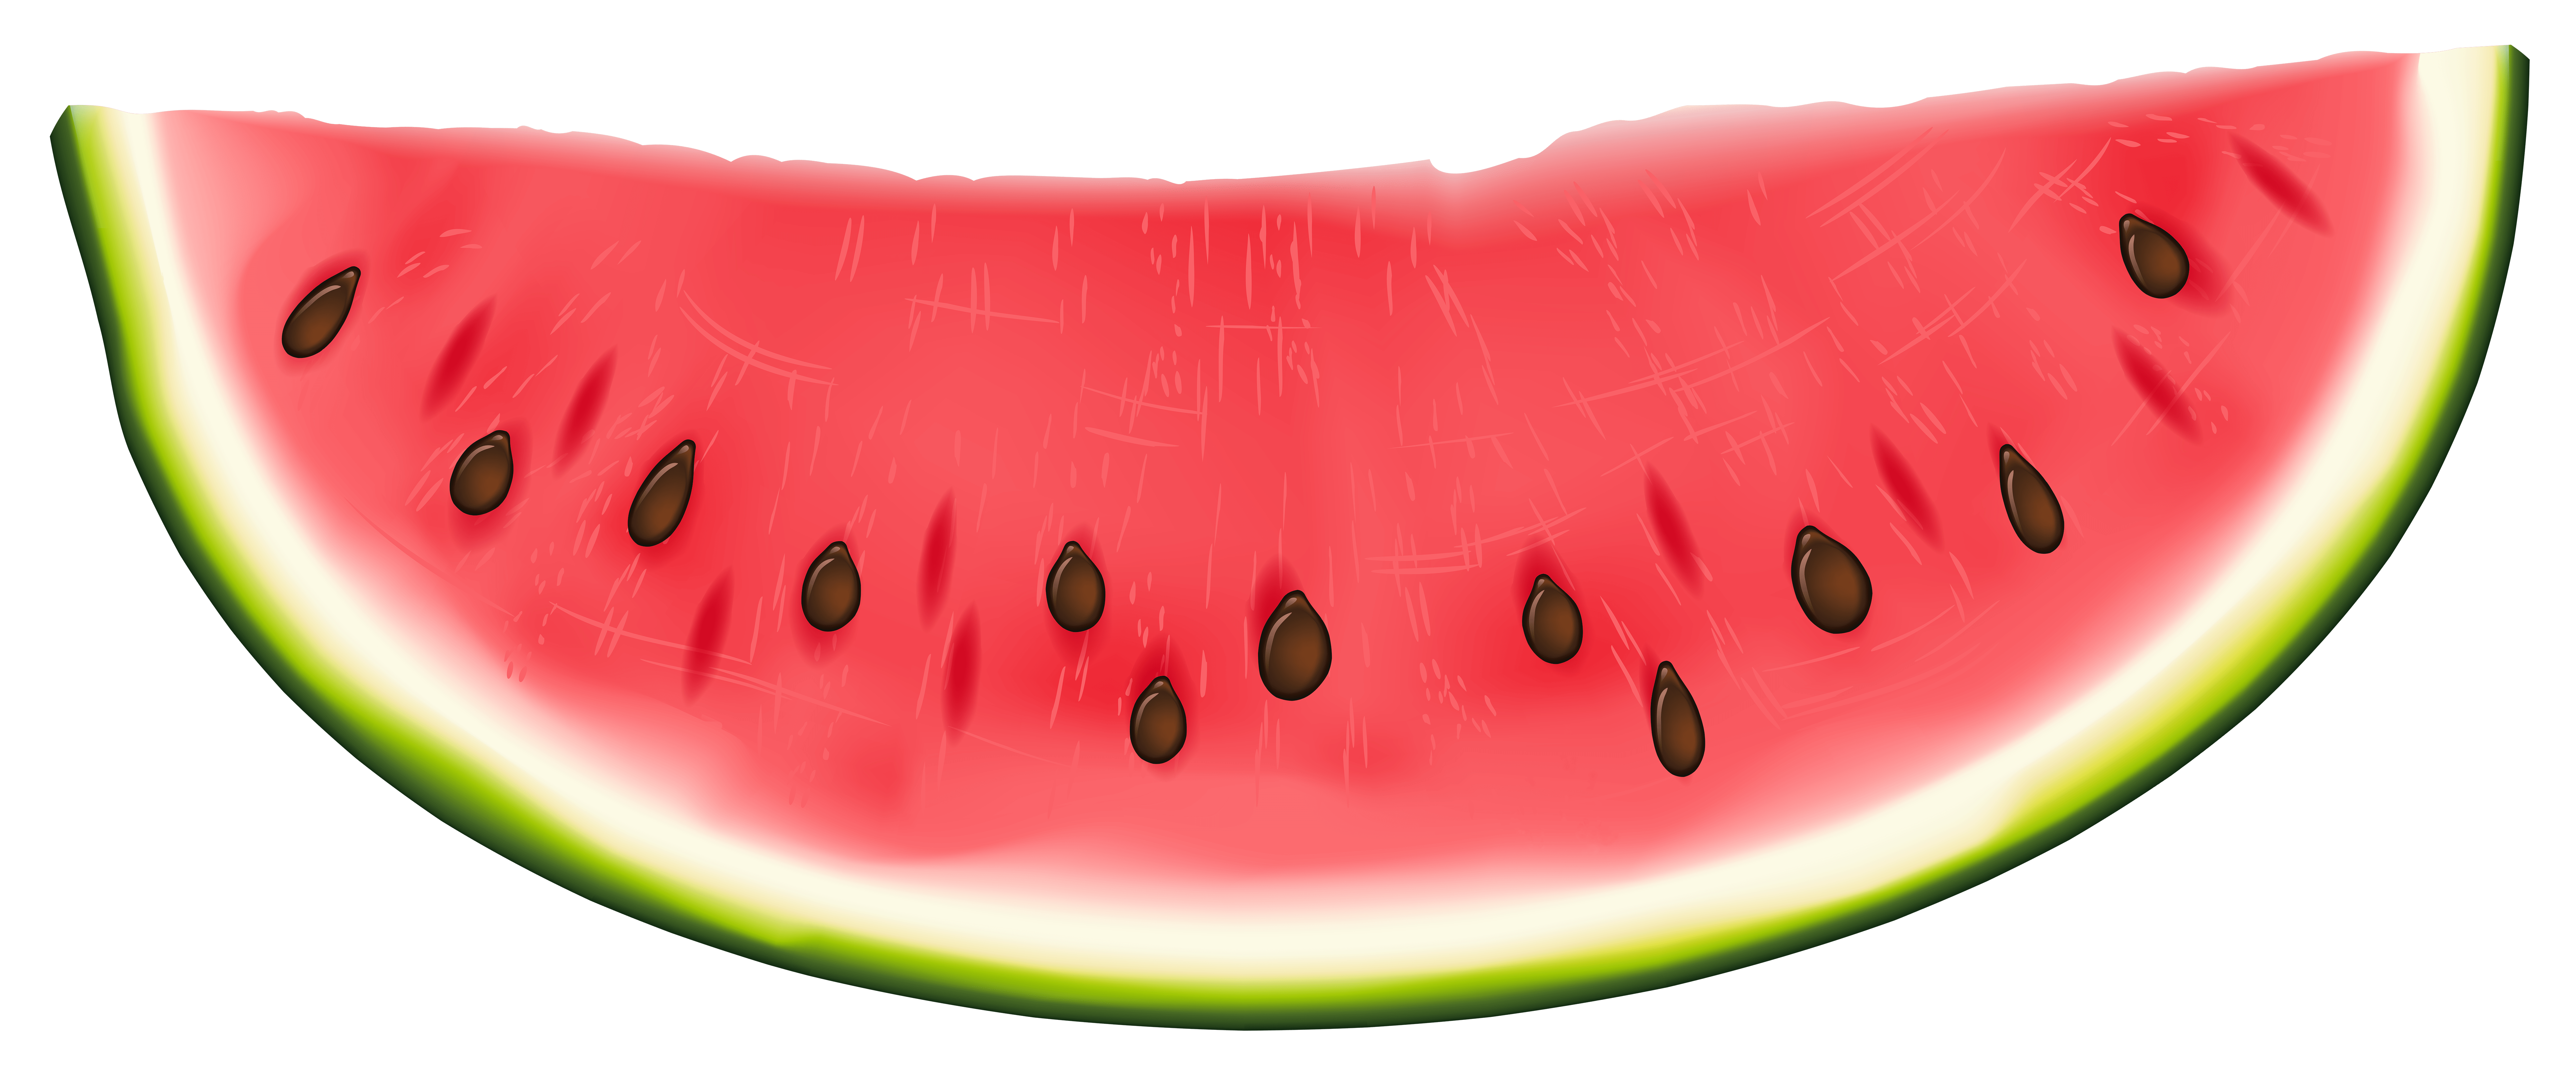 Watermelon PNG Clip Art Image Quality